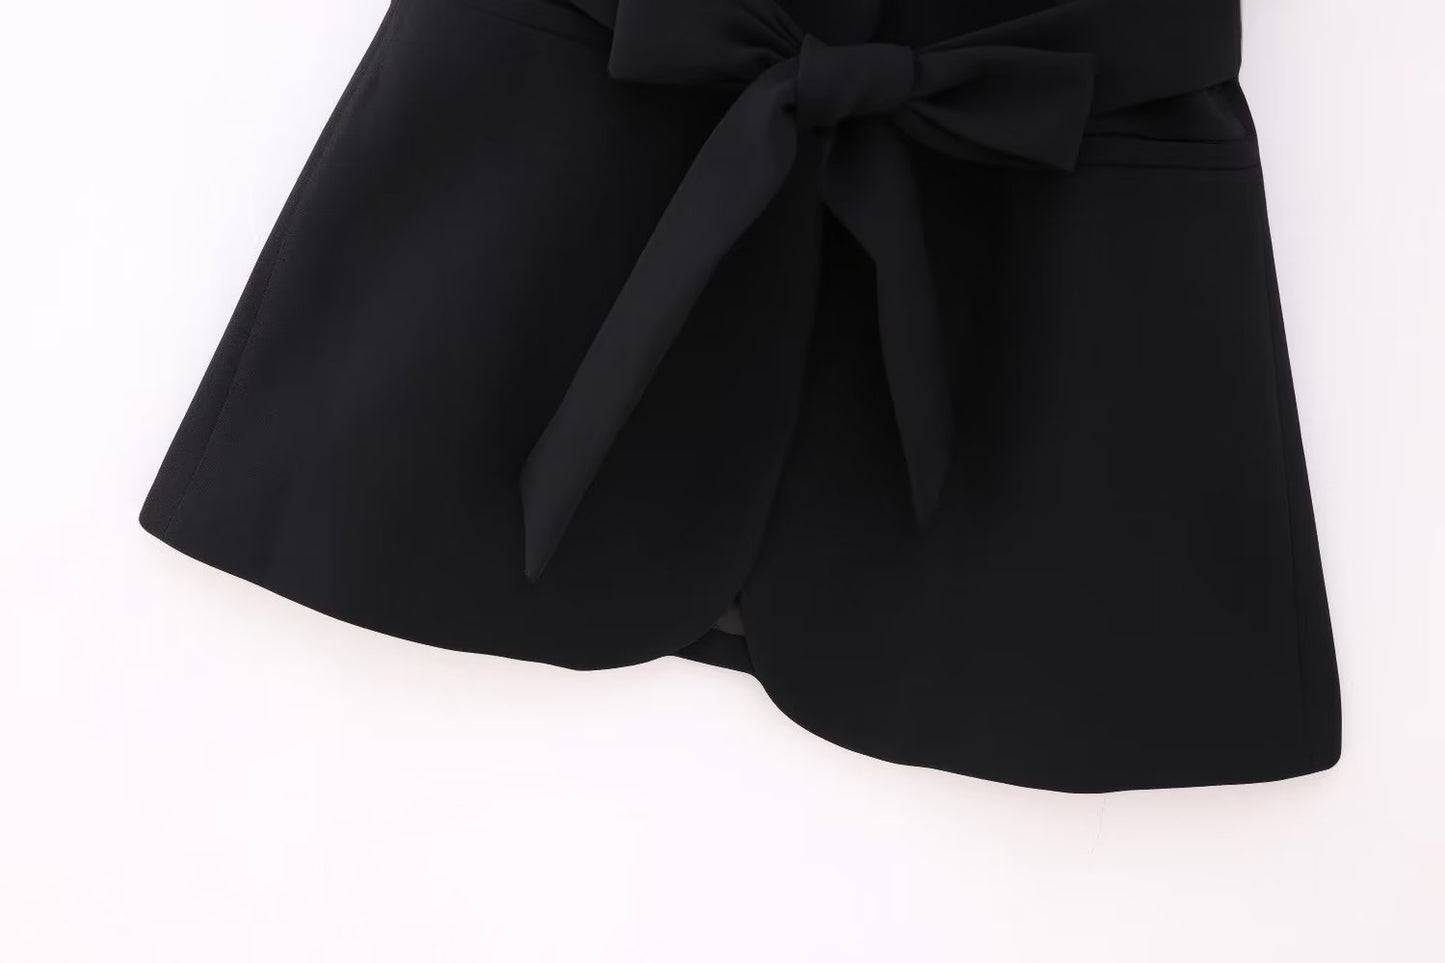 Dark Chic Outfits | Kimono Vest Belt Pants Outfit